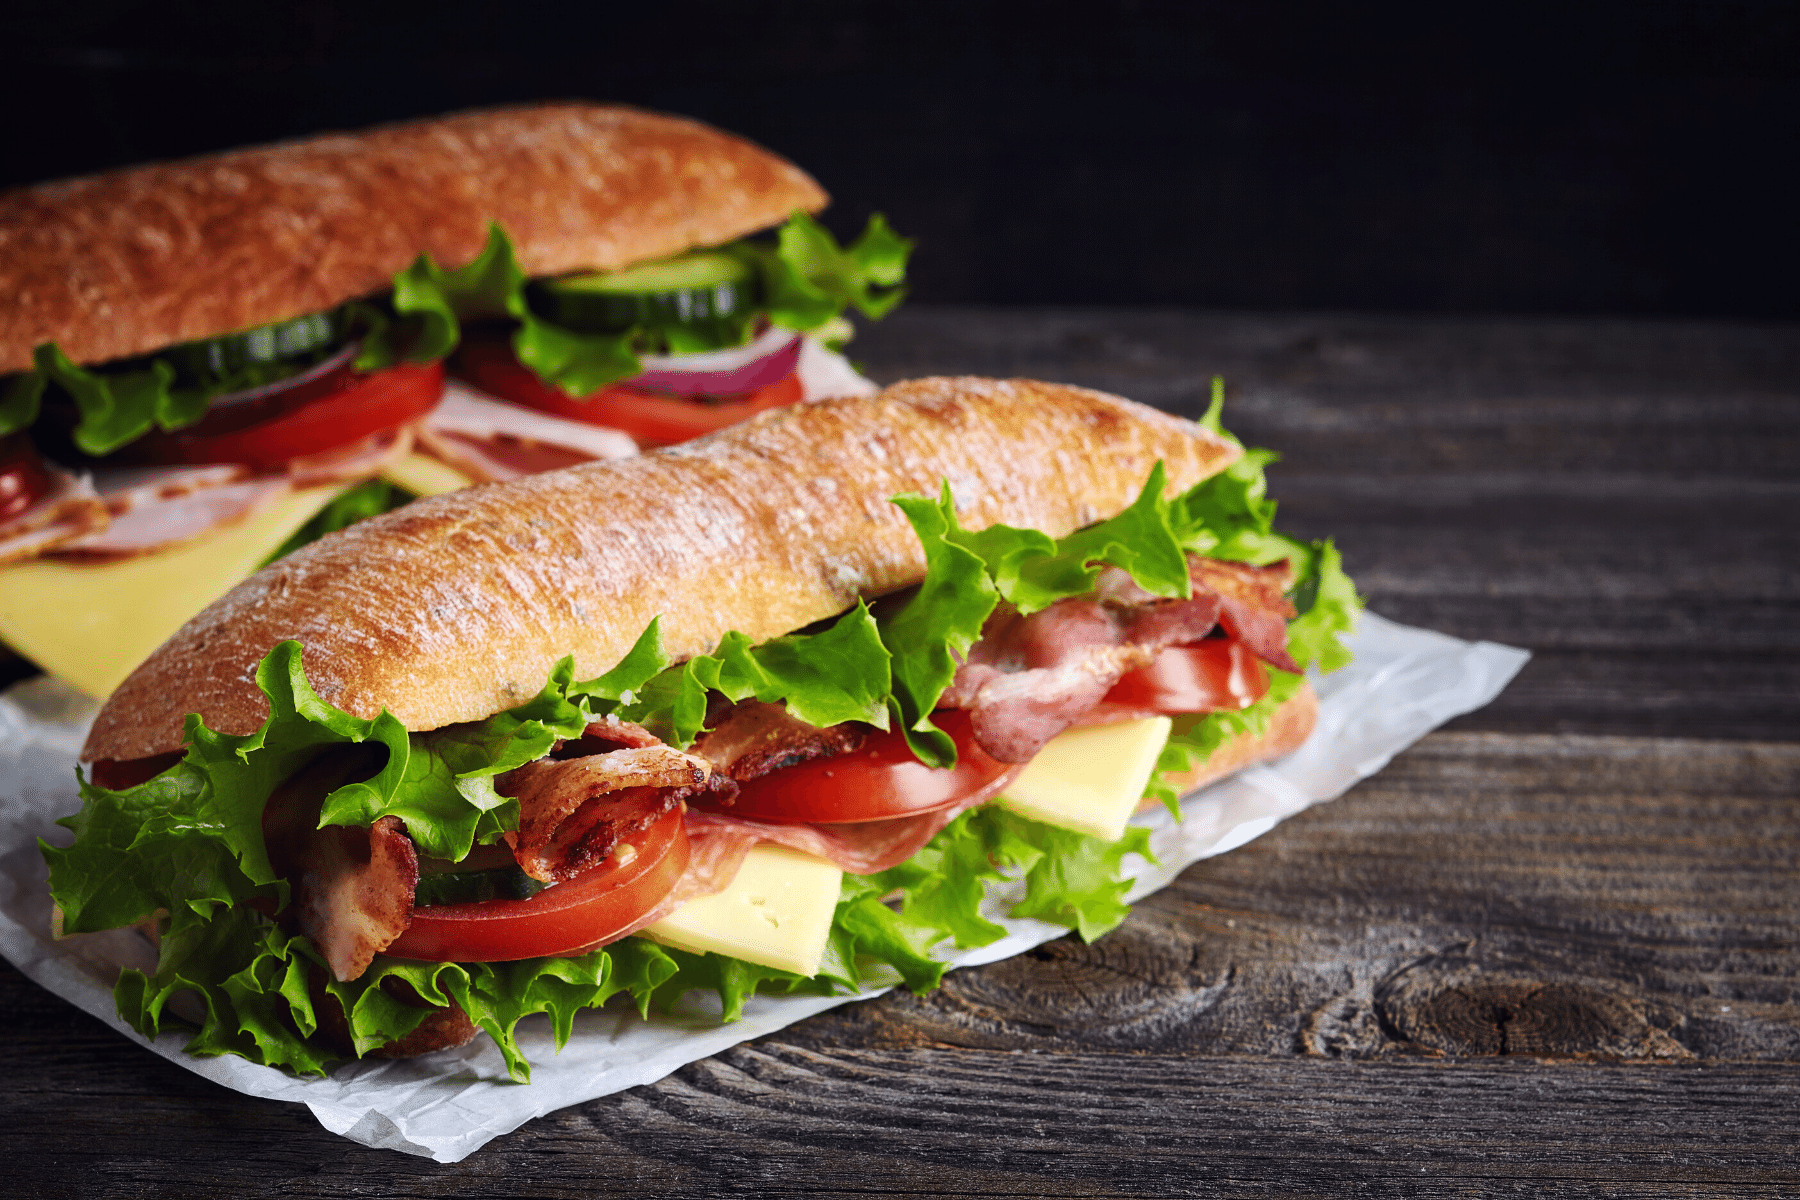 Two submarine sandwiches